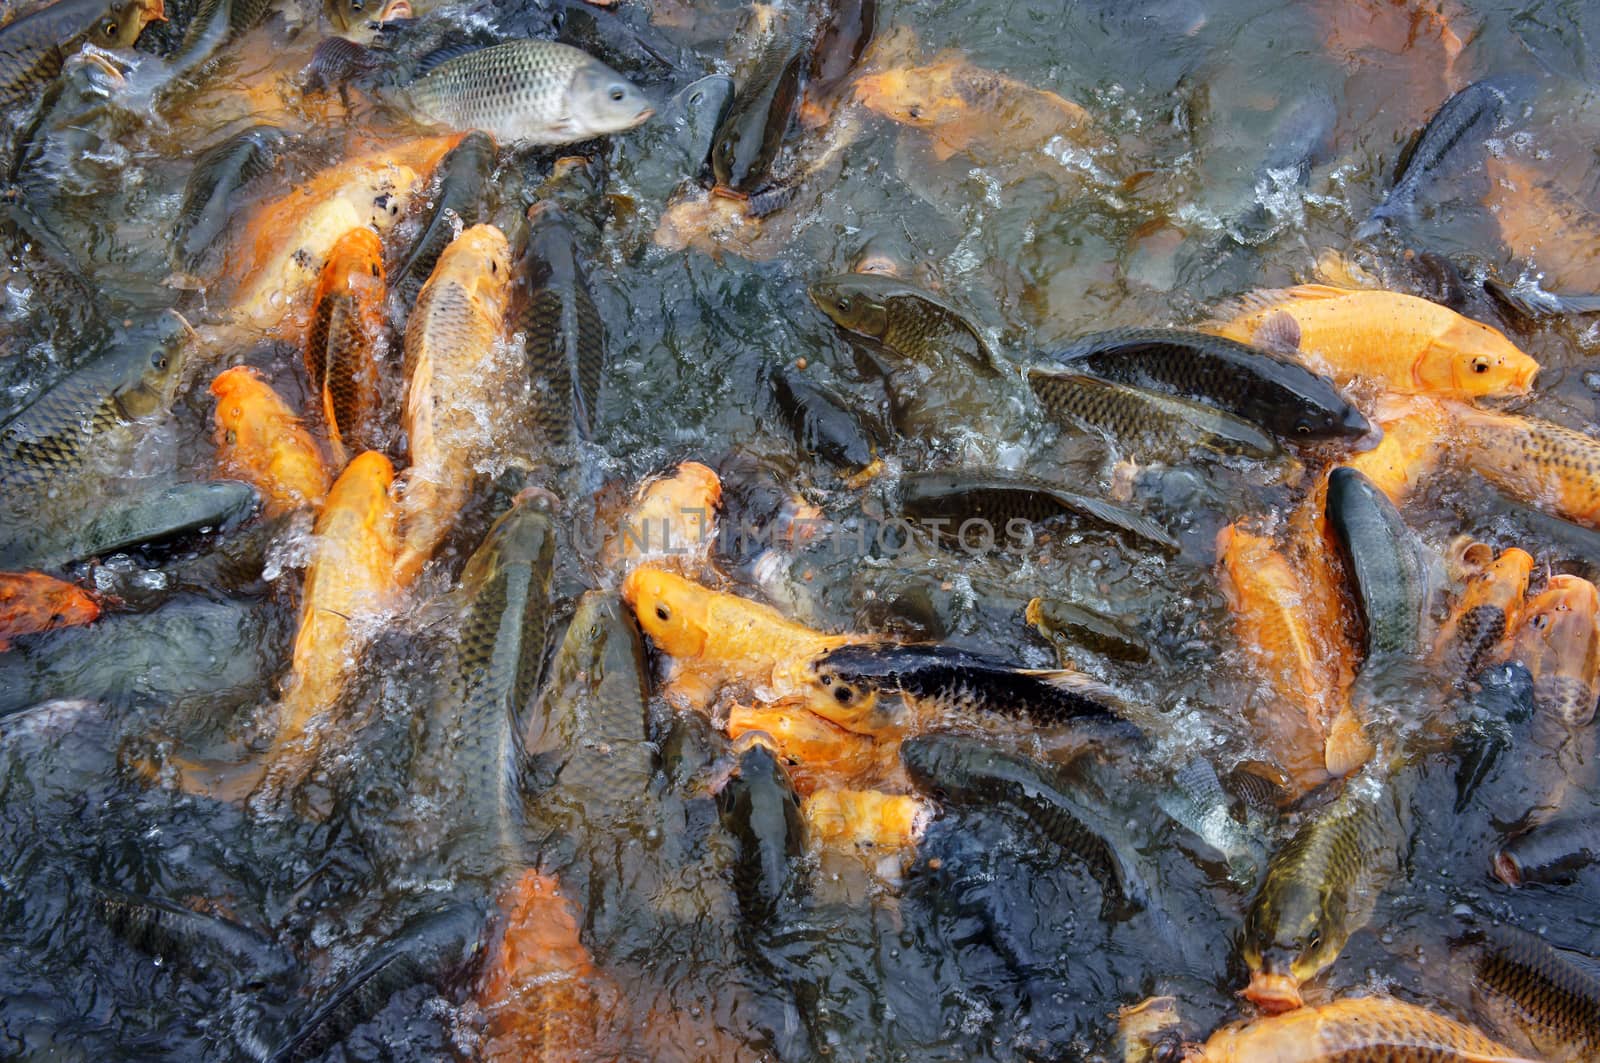 Vietnam fish farming at Mekong Delta, group of carp in fish pond